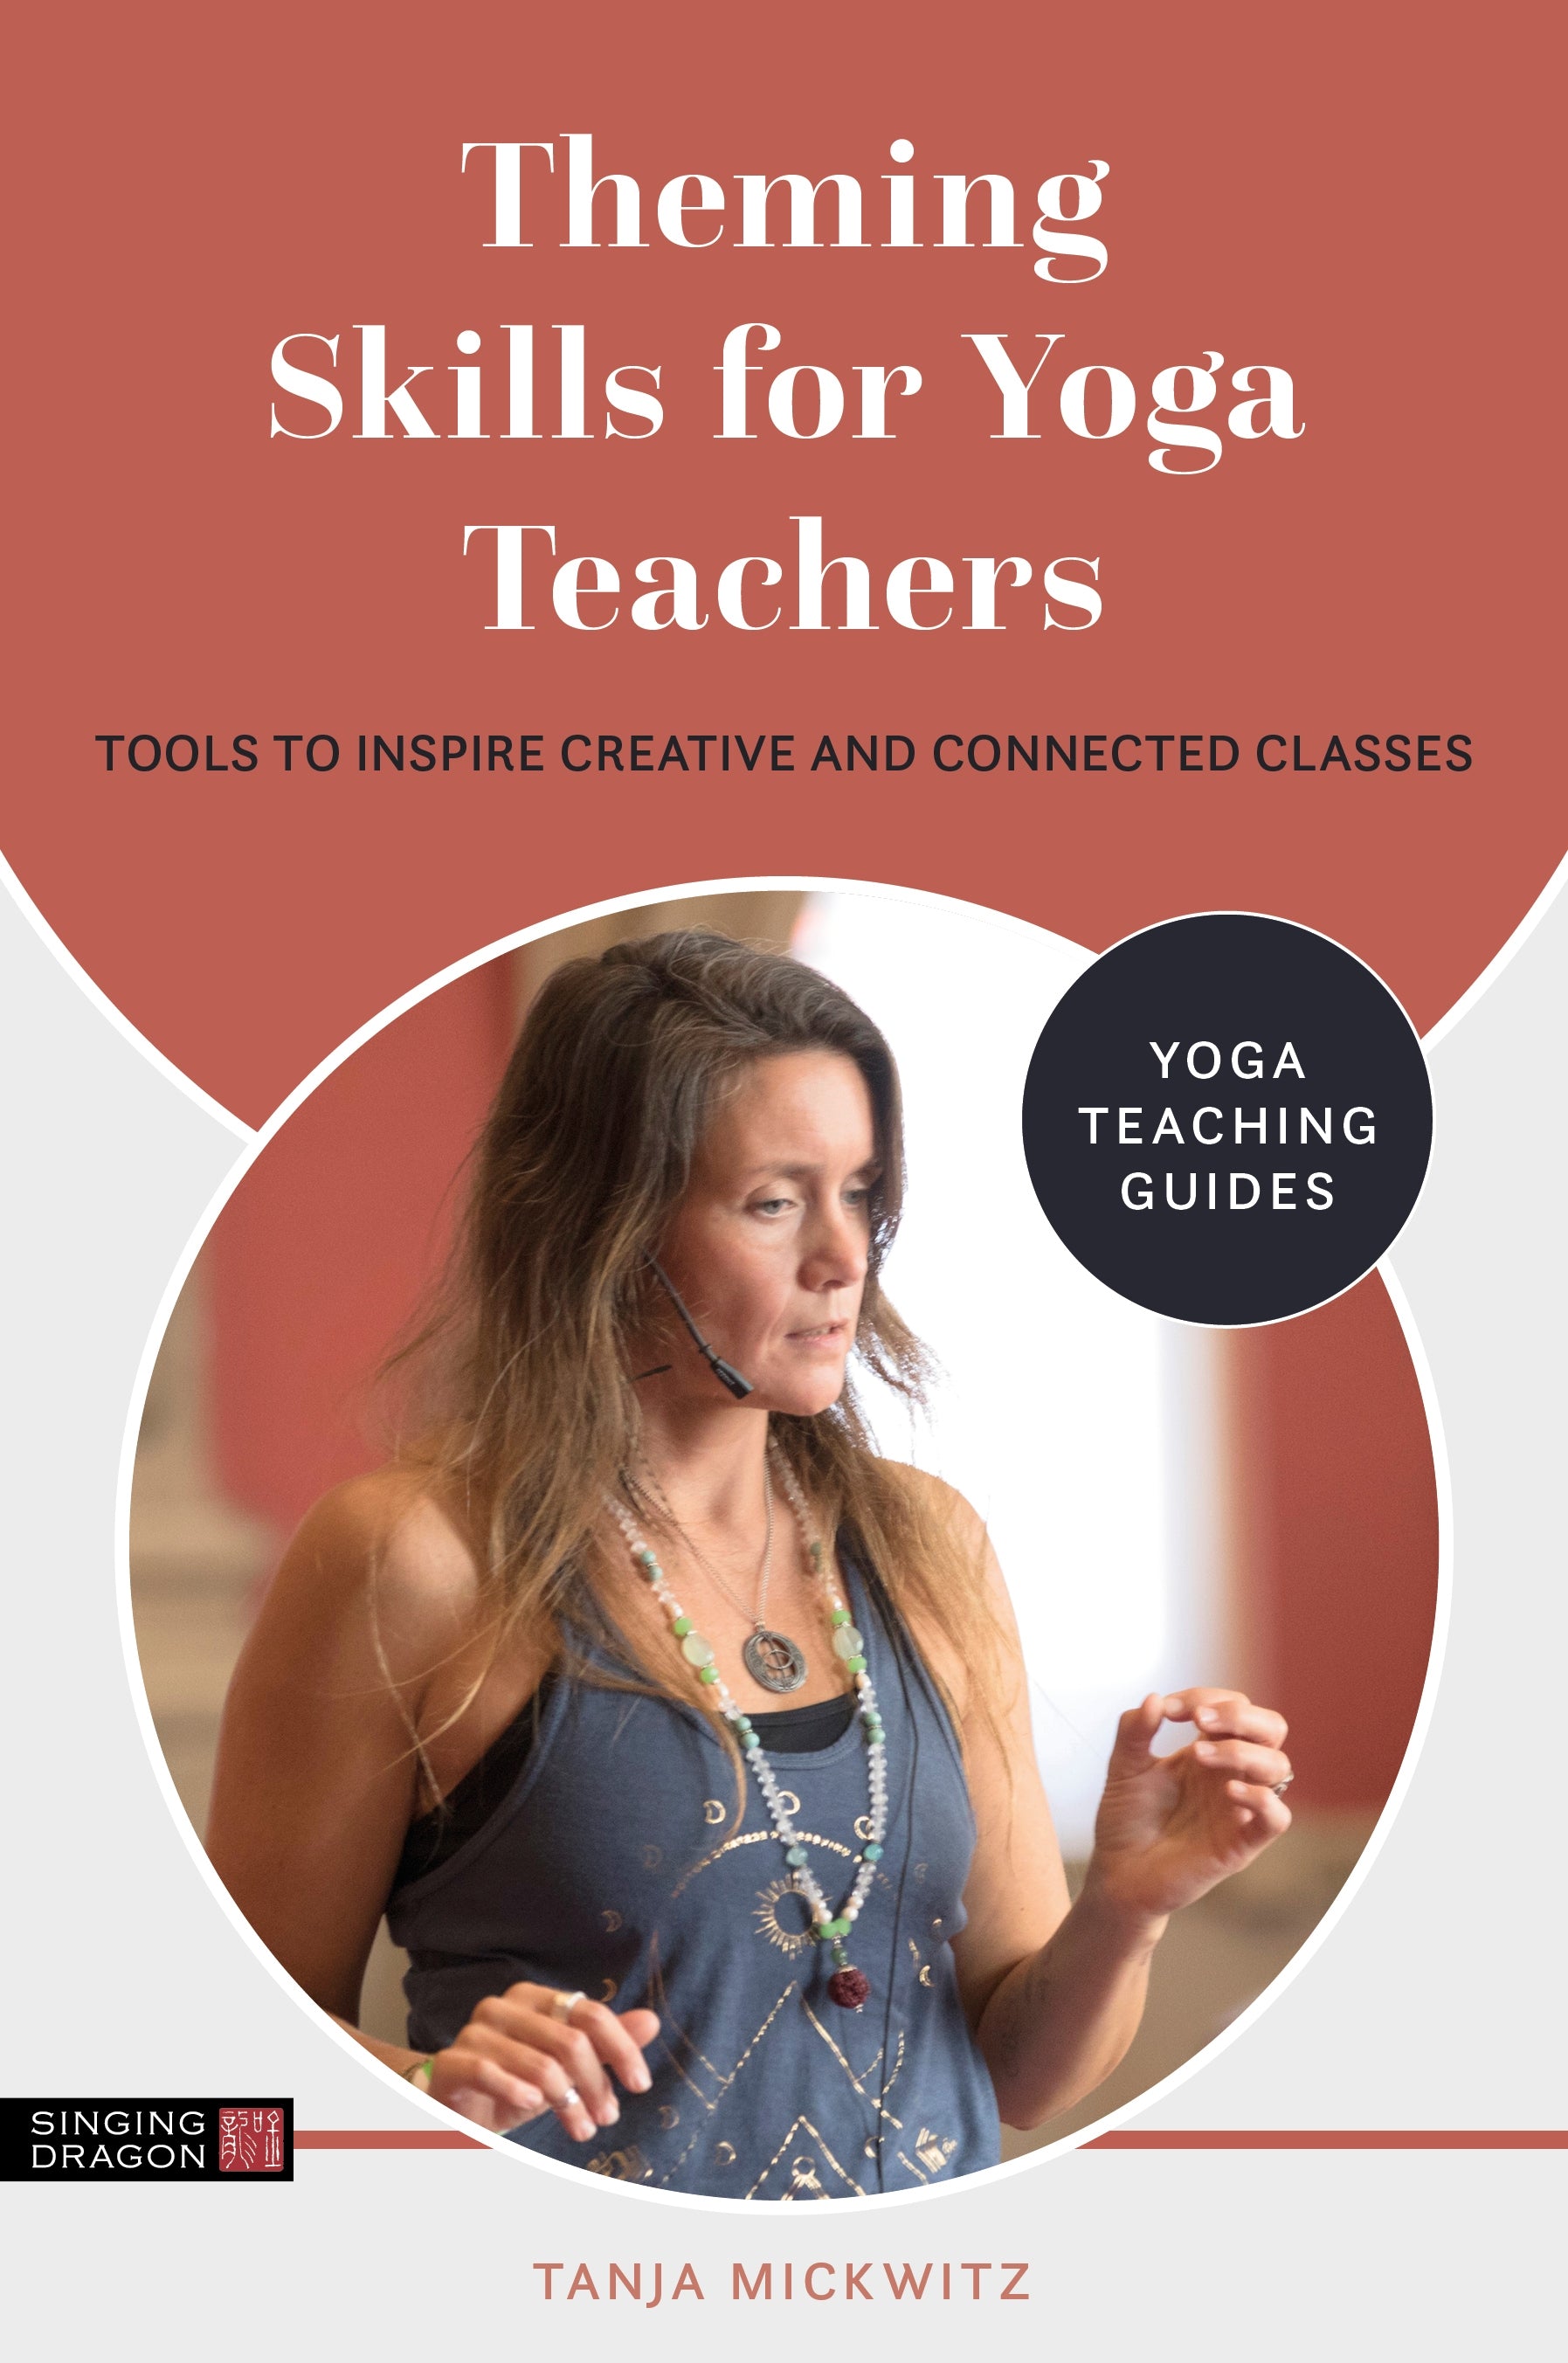 Theming Skills for Yoga Teachers by Tanja Mickwitz